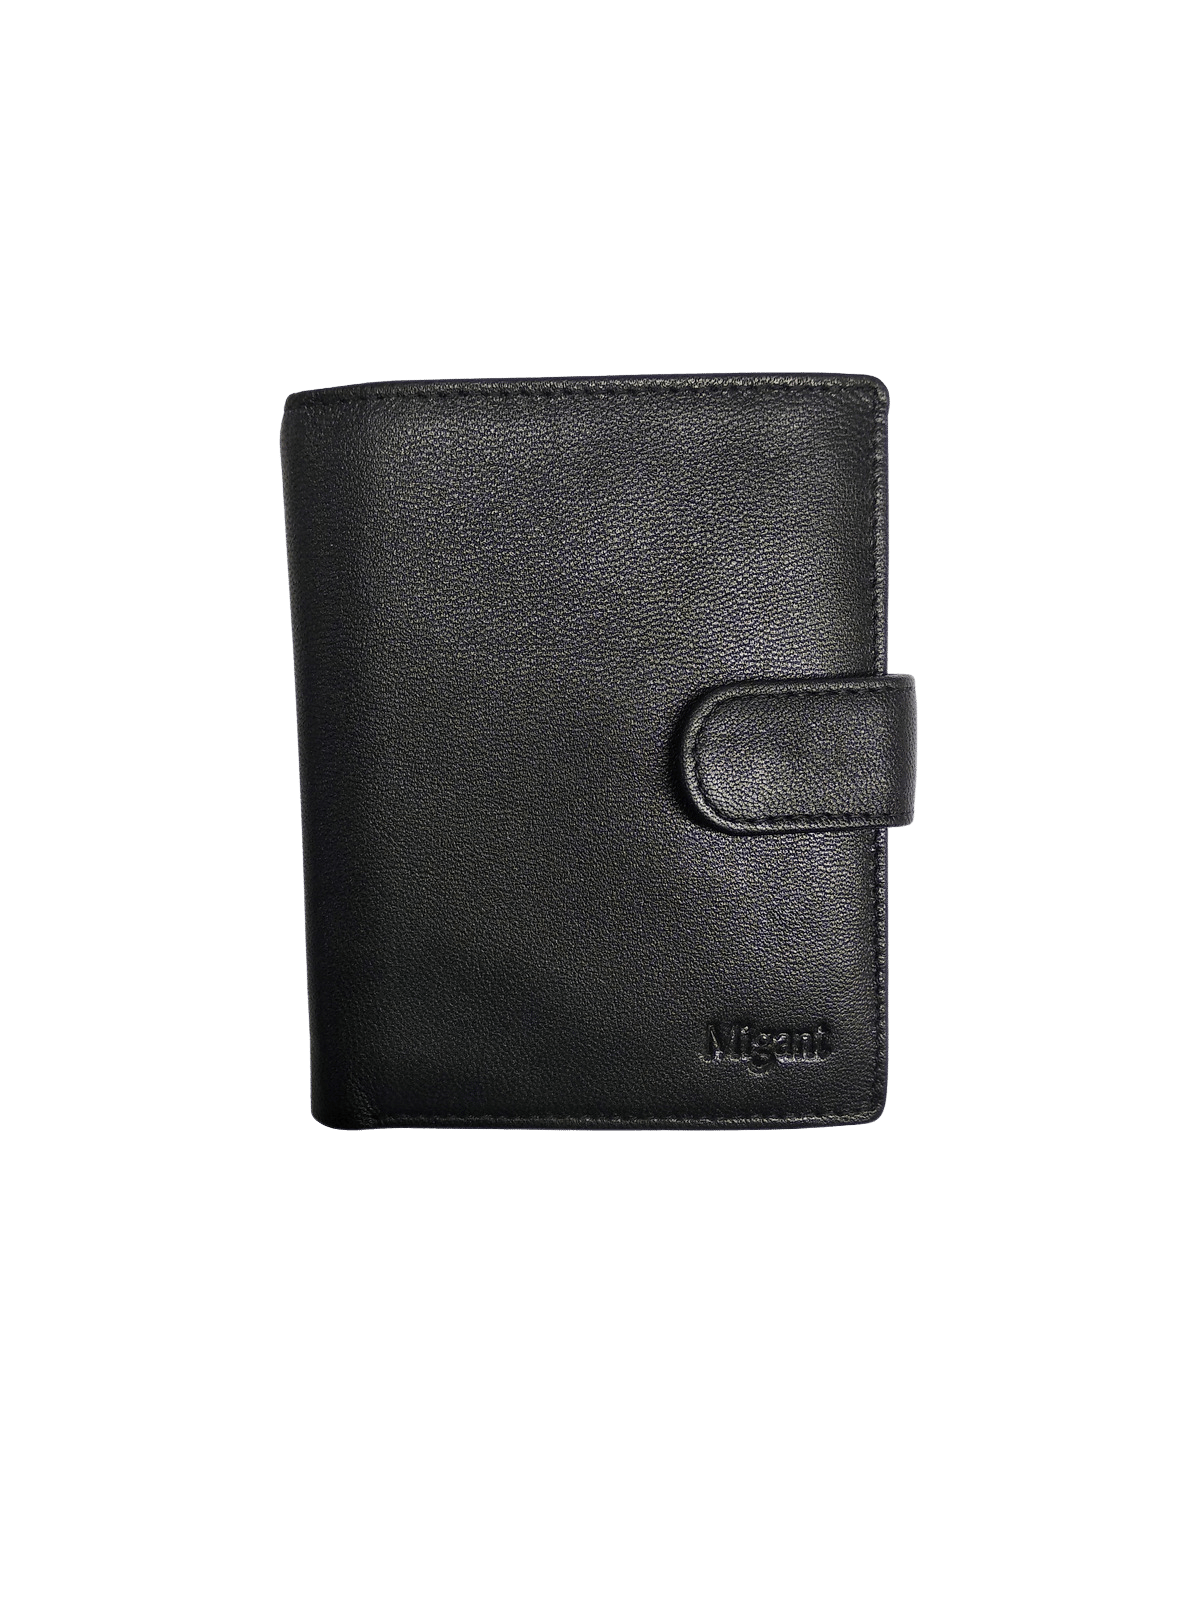 Migant Design Black men wallet leather 6450 - Migant